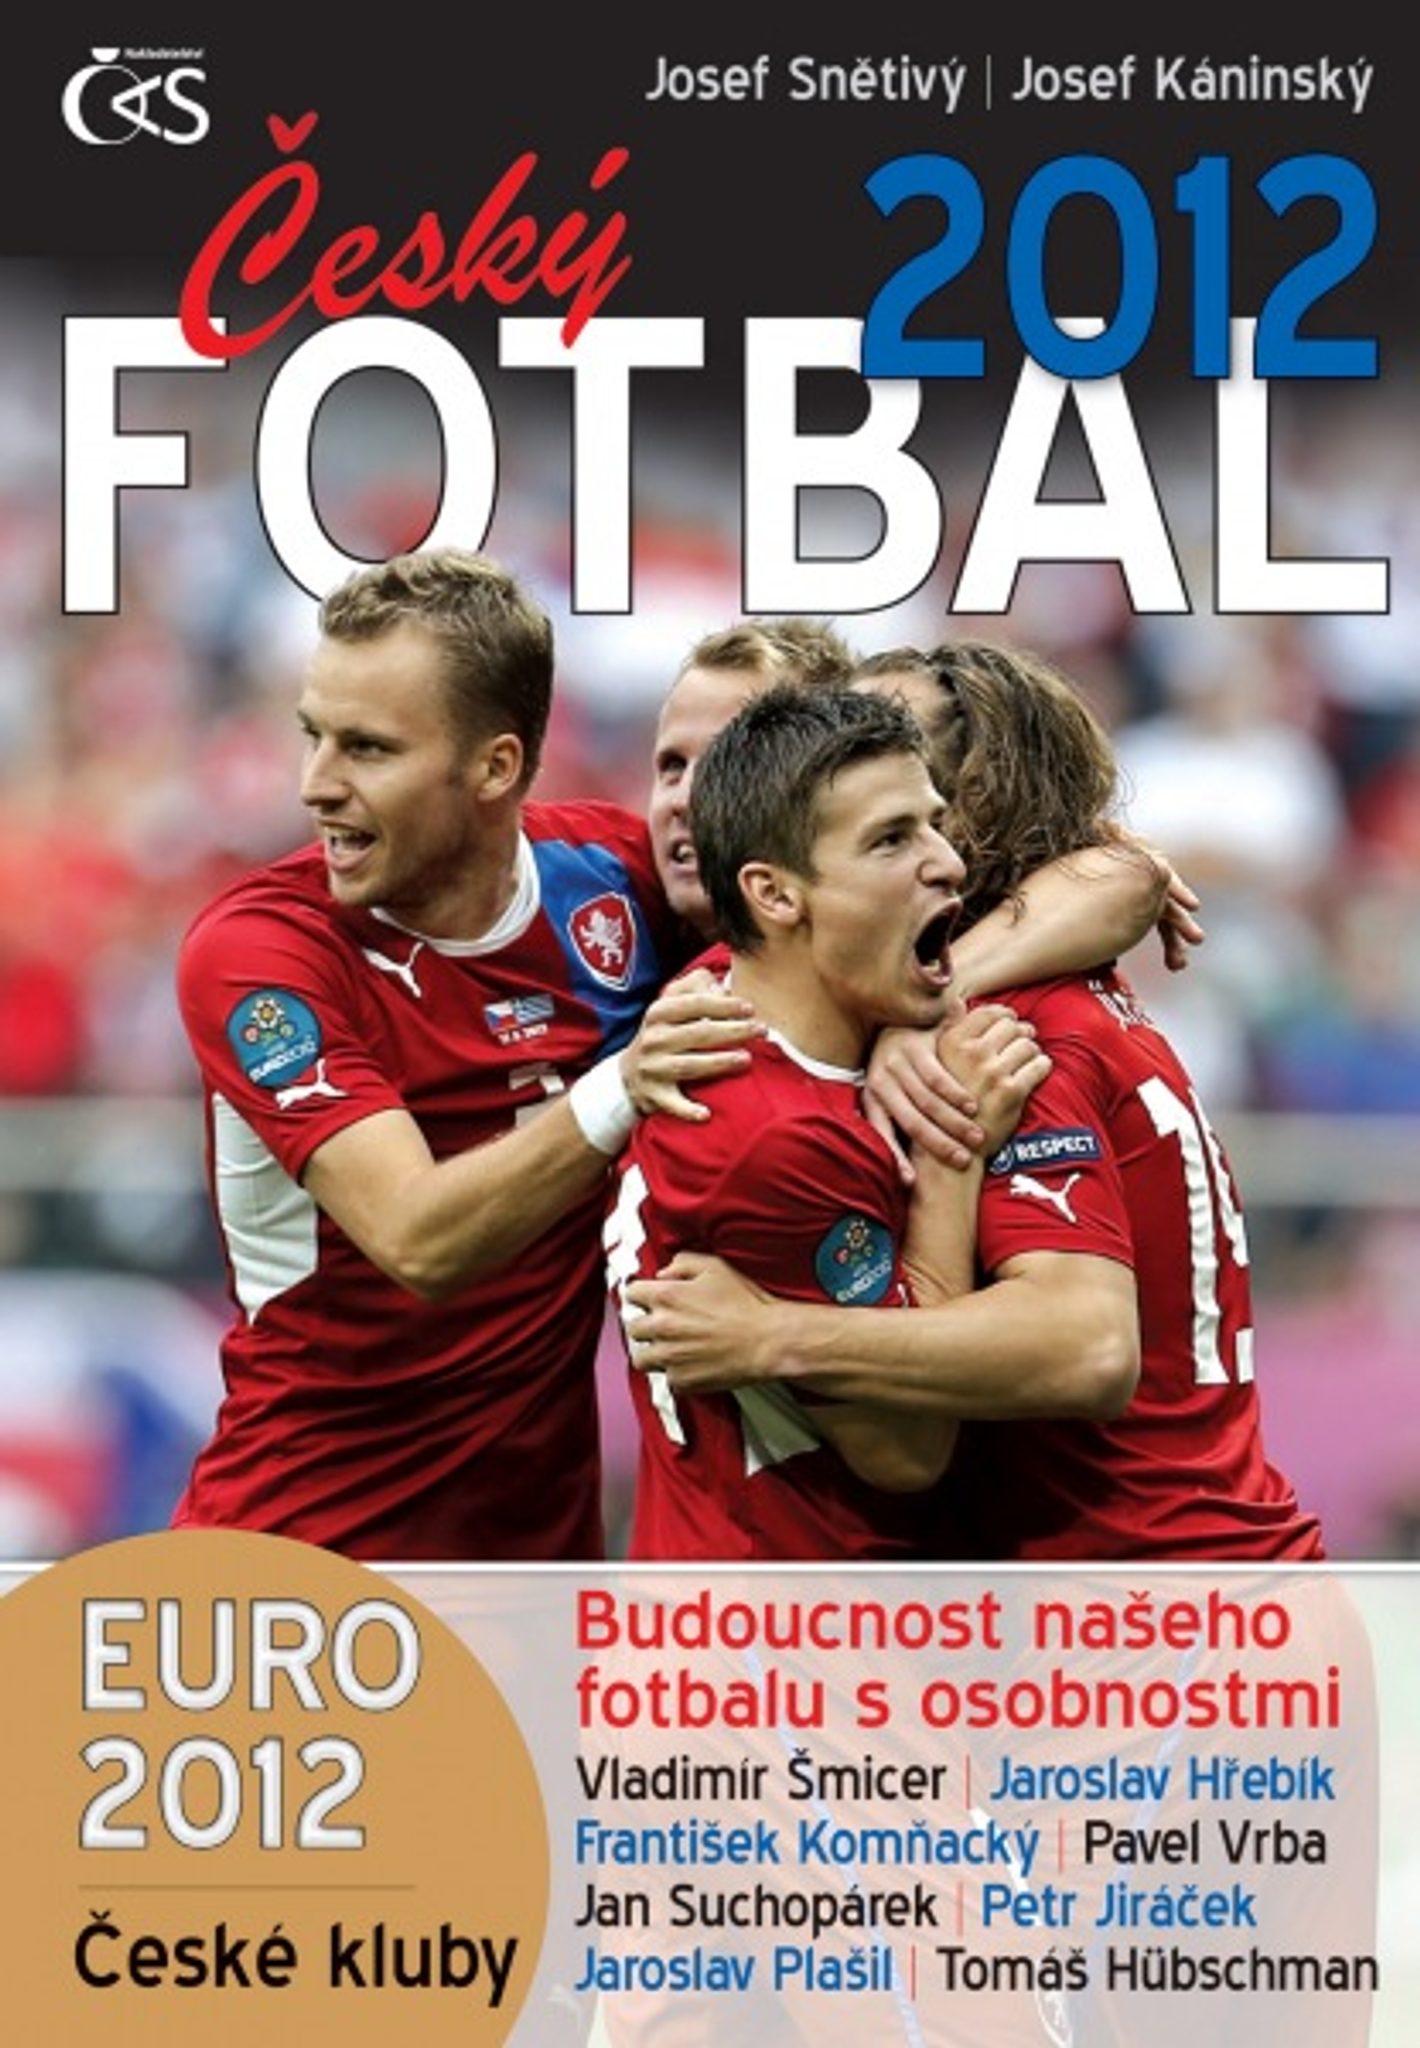 esk fotbal 2012 - Euro 2012, esk kluby a budoucnost naeho fotbalu s osobnostmi